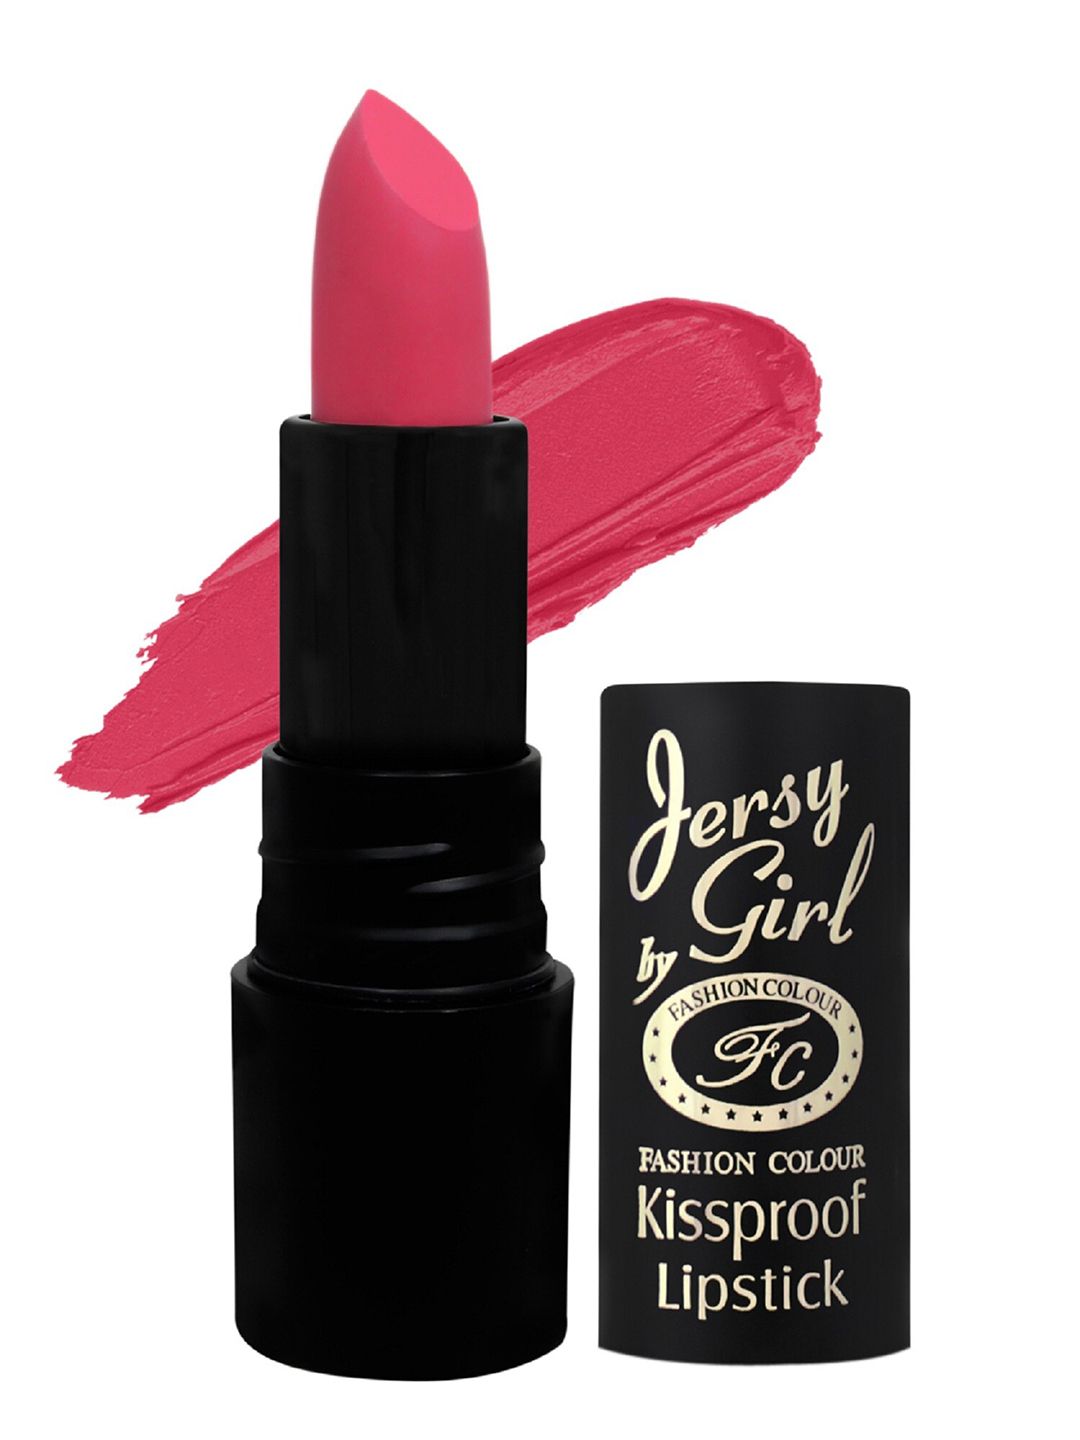 Fashion Colour Jersy Girl Kiss Proof Lipstick - Carmine Rose 3 3.8 gm Price in India